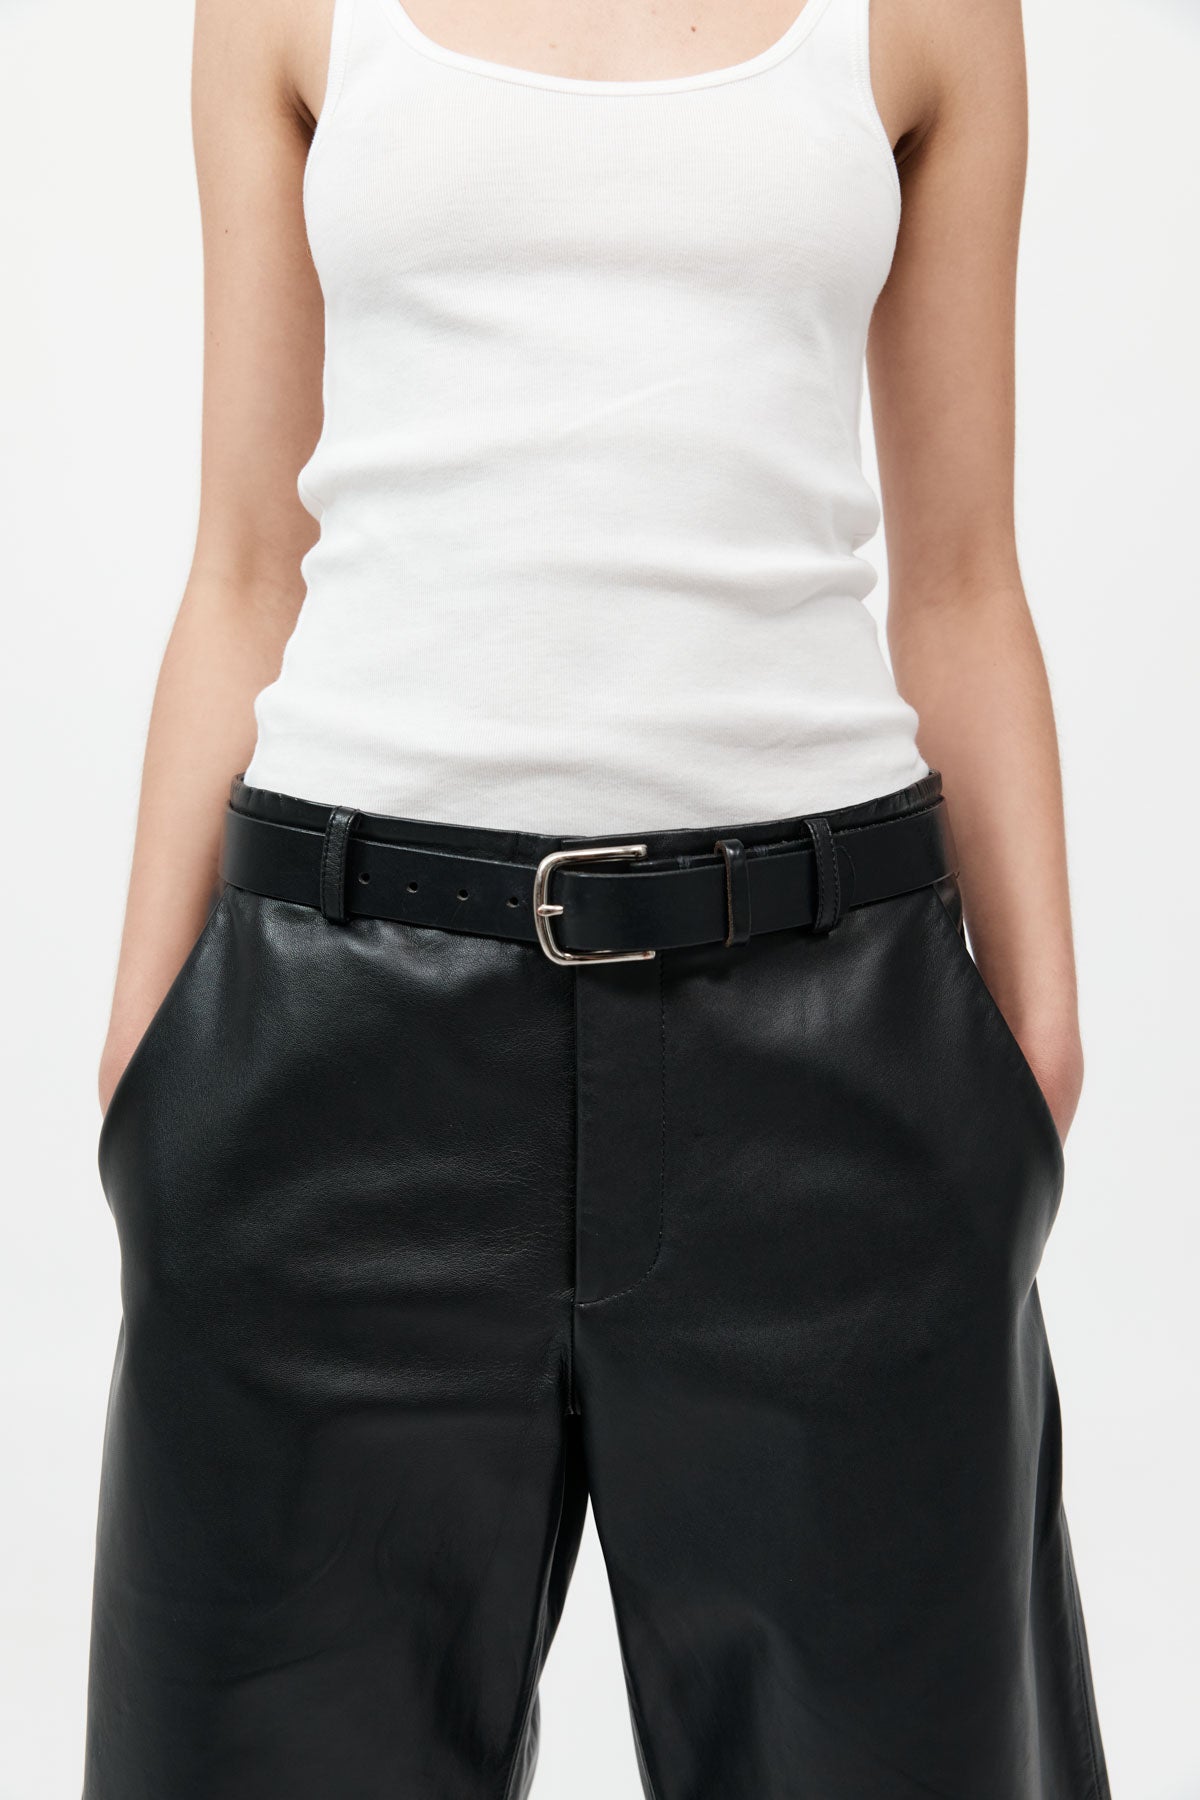 Leather Bermuda Shorts - Black